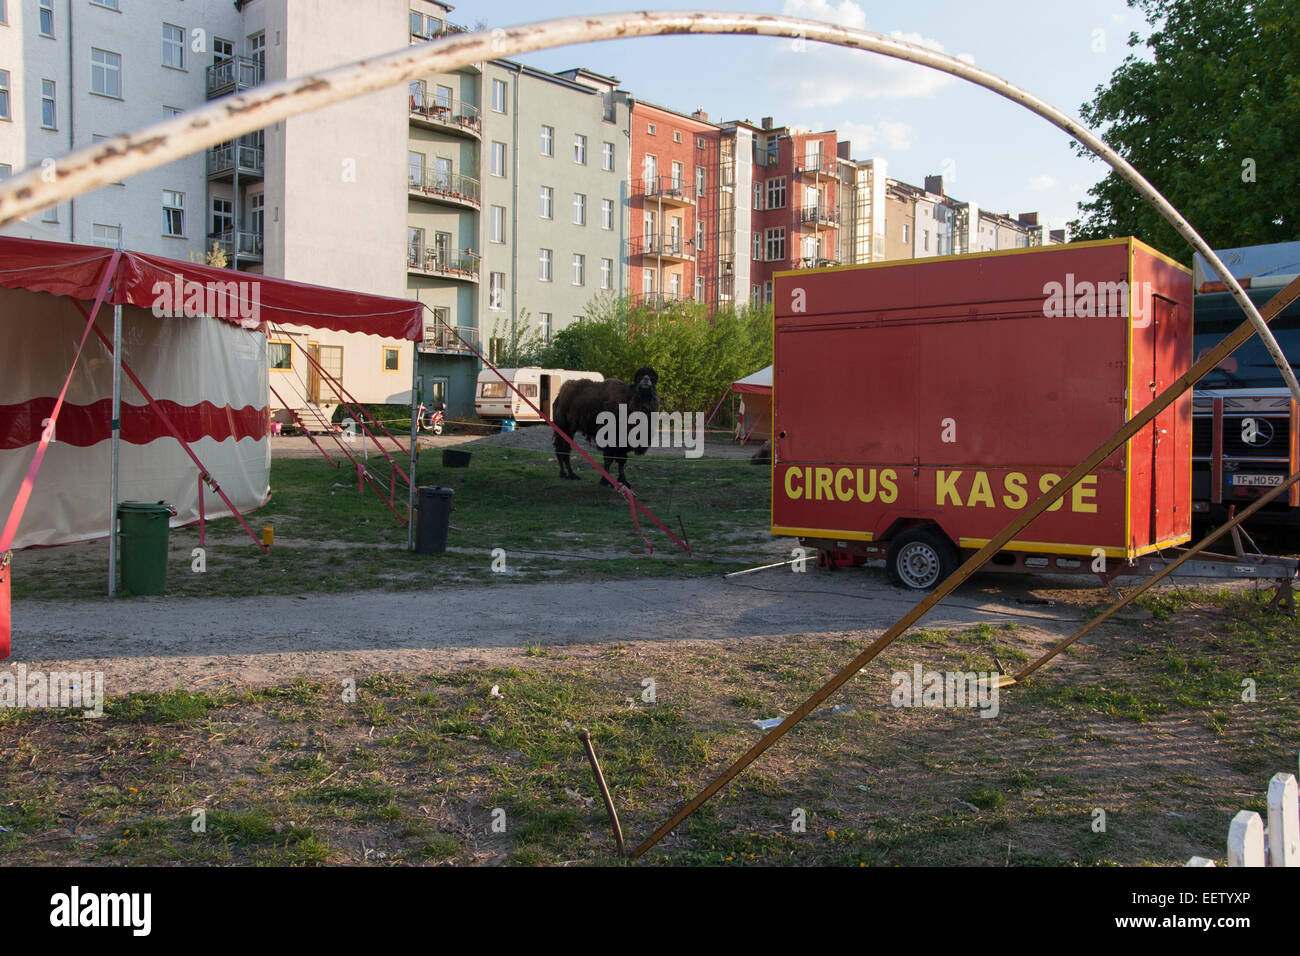 camel circus kasse Berlin Germany Stock Photo